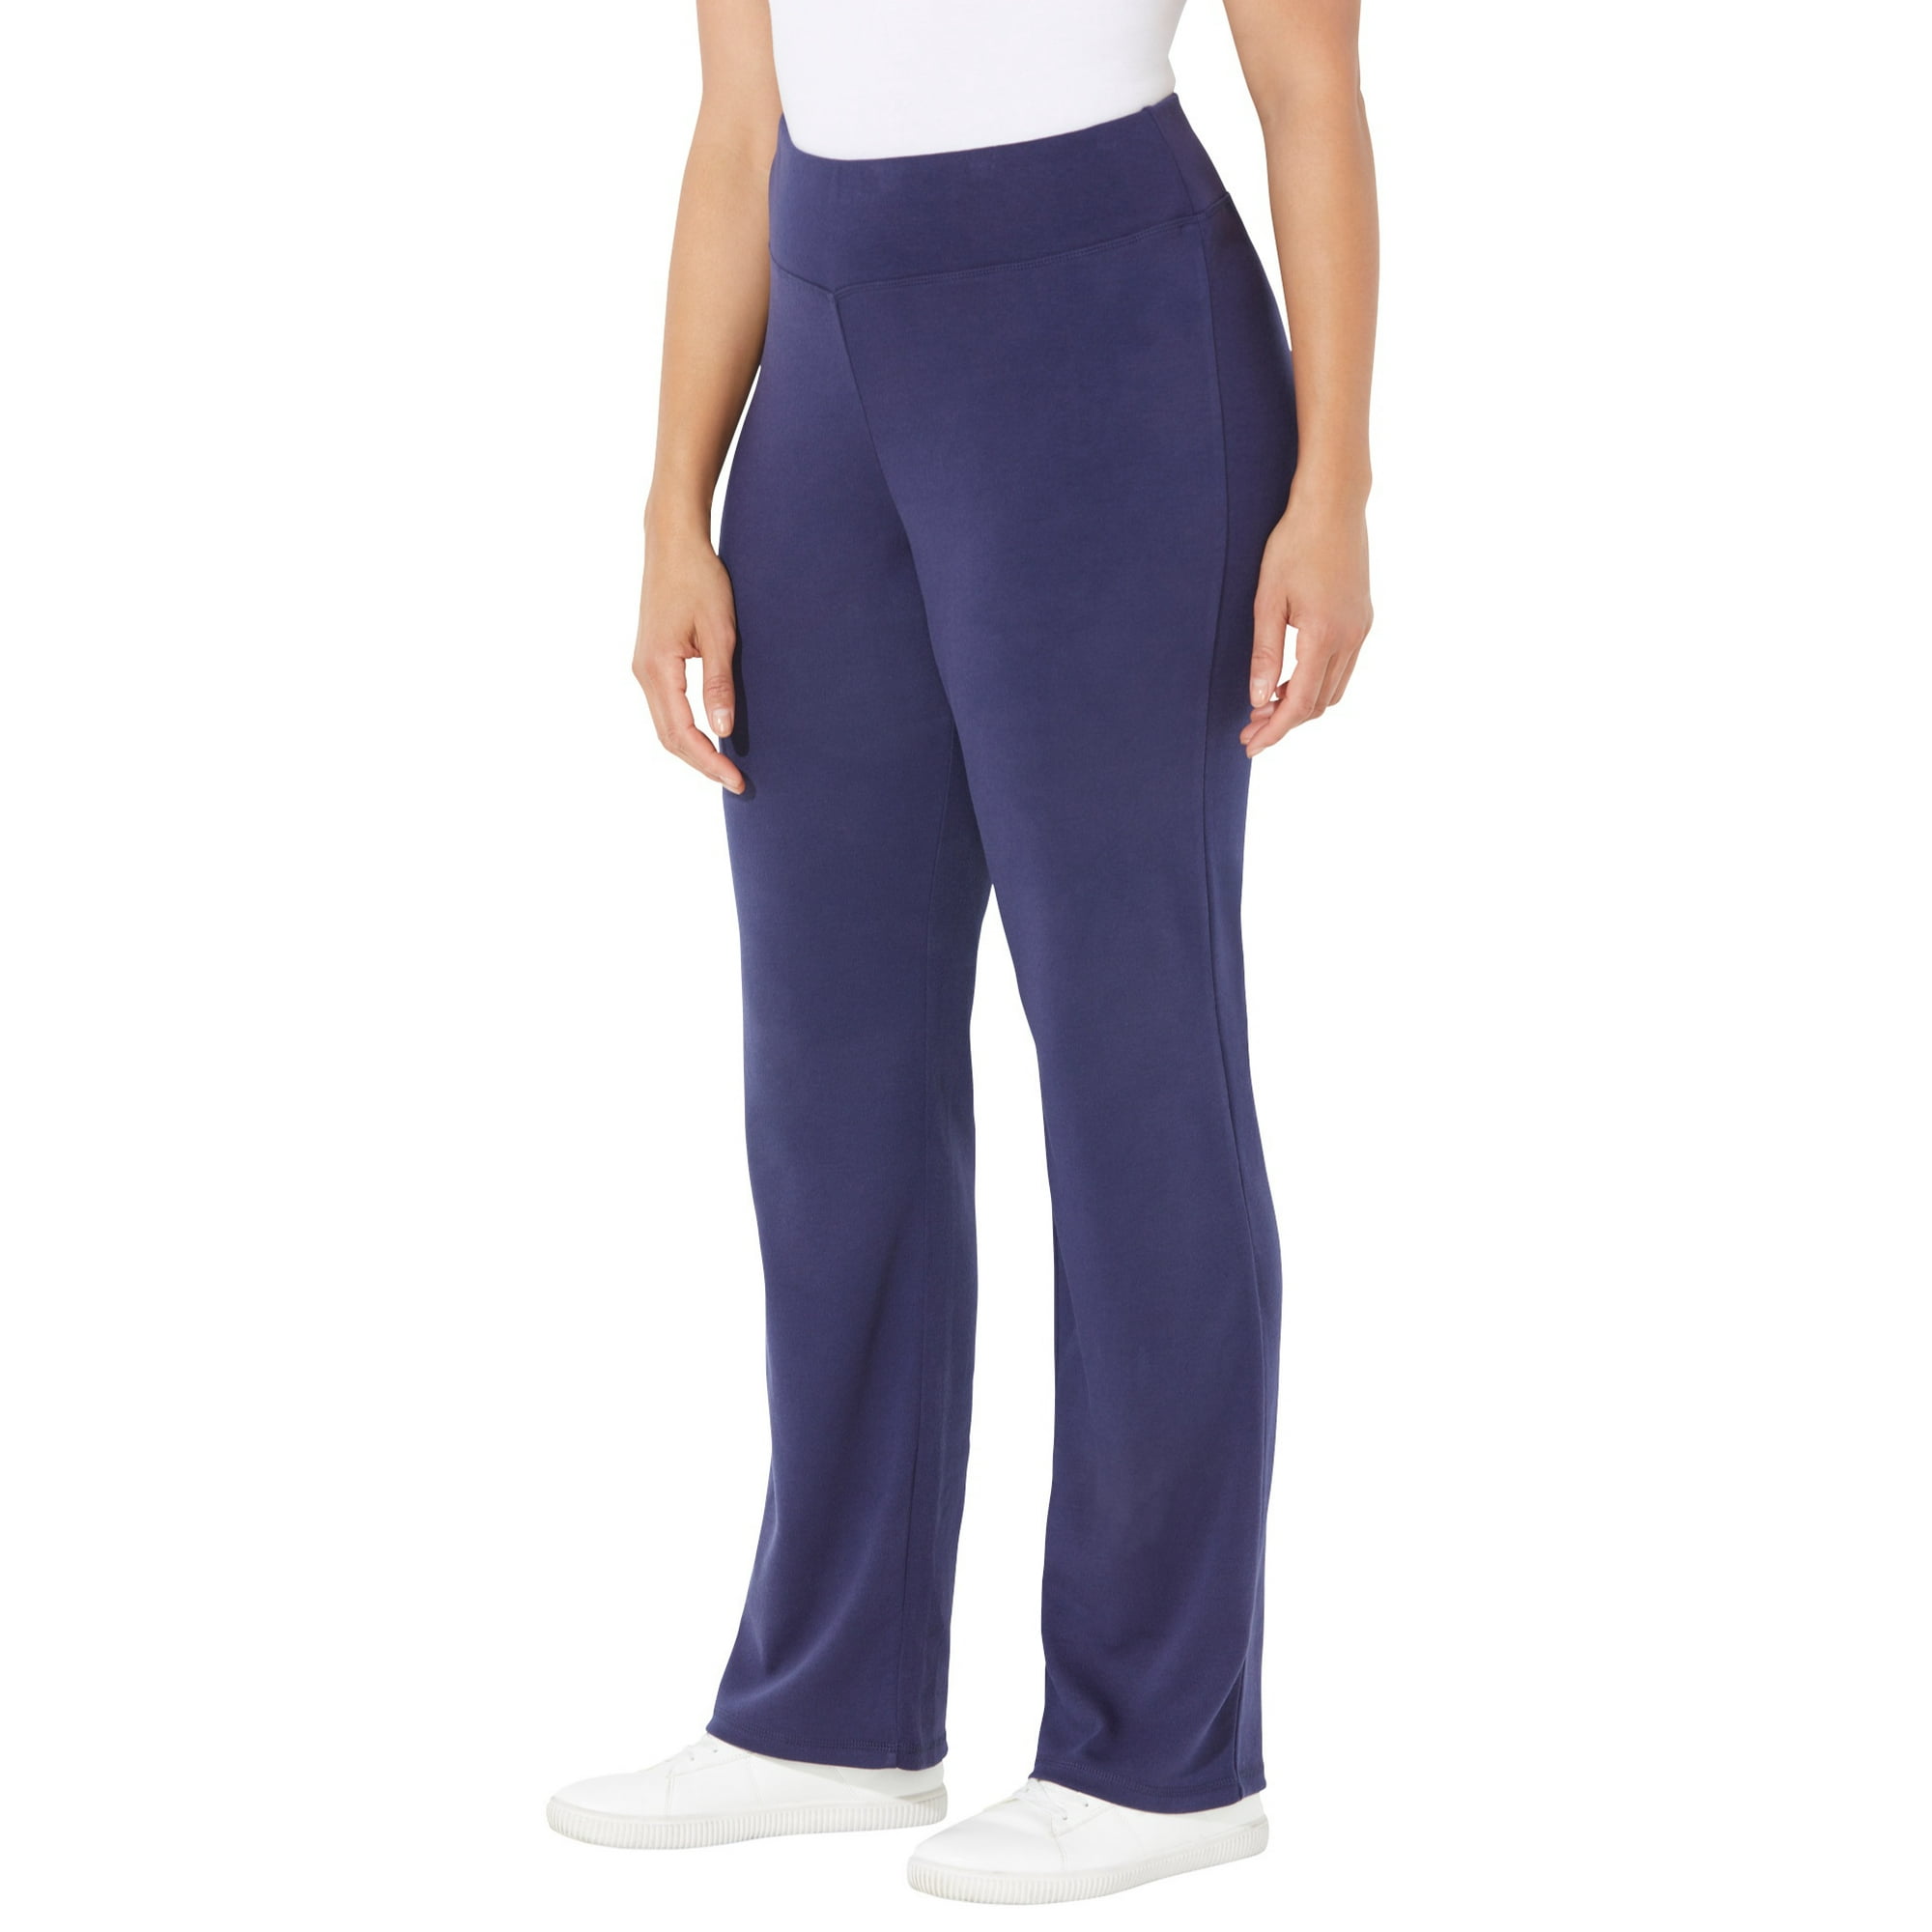 Catherines Women's Plus Size Petite Yoga Pant Walmart.com